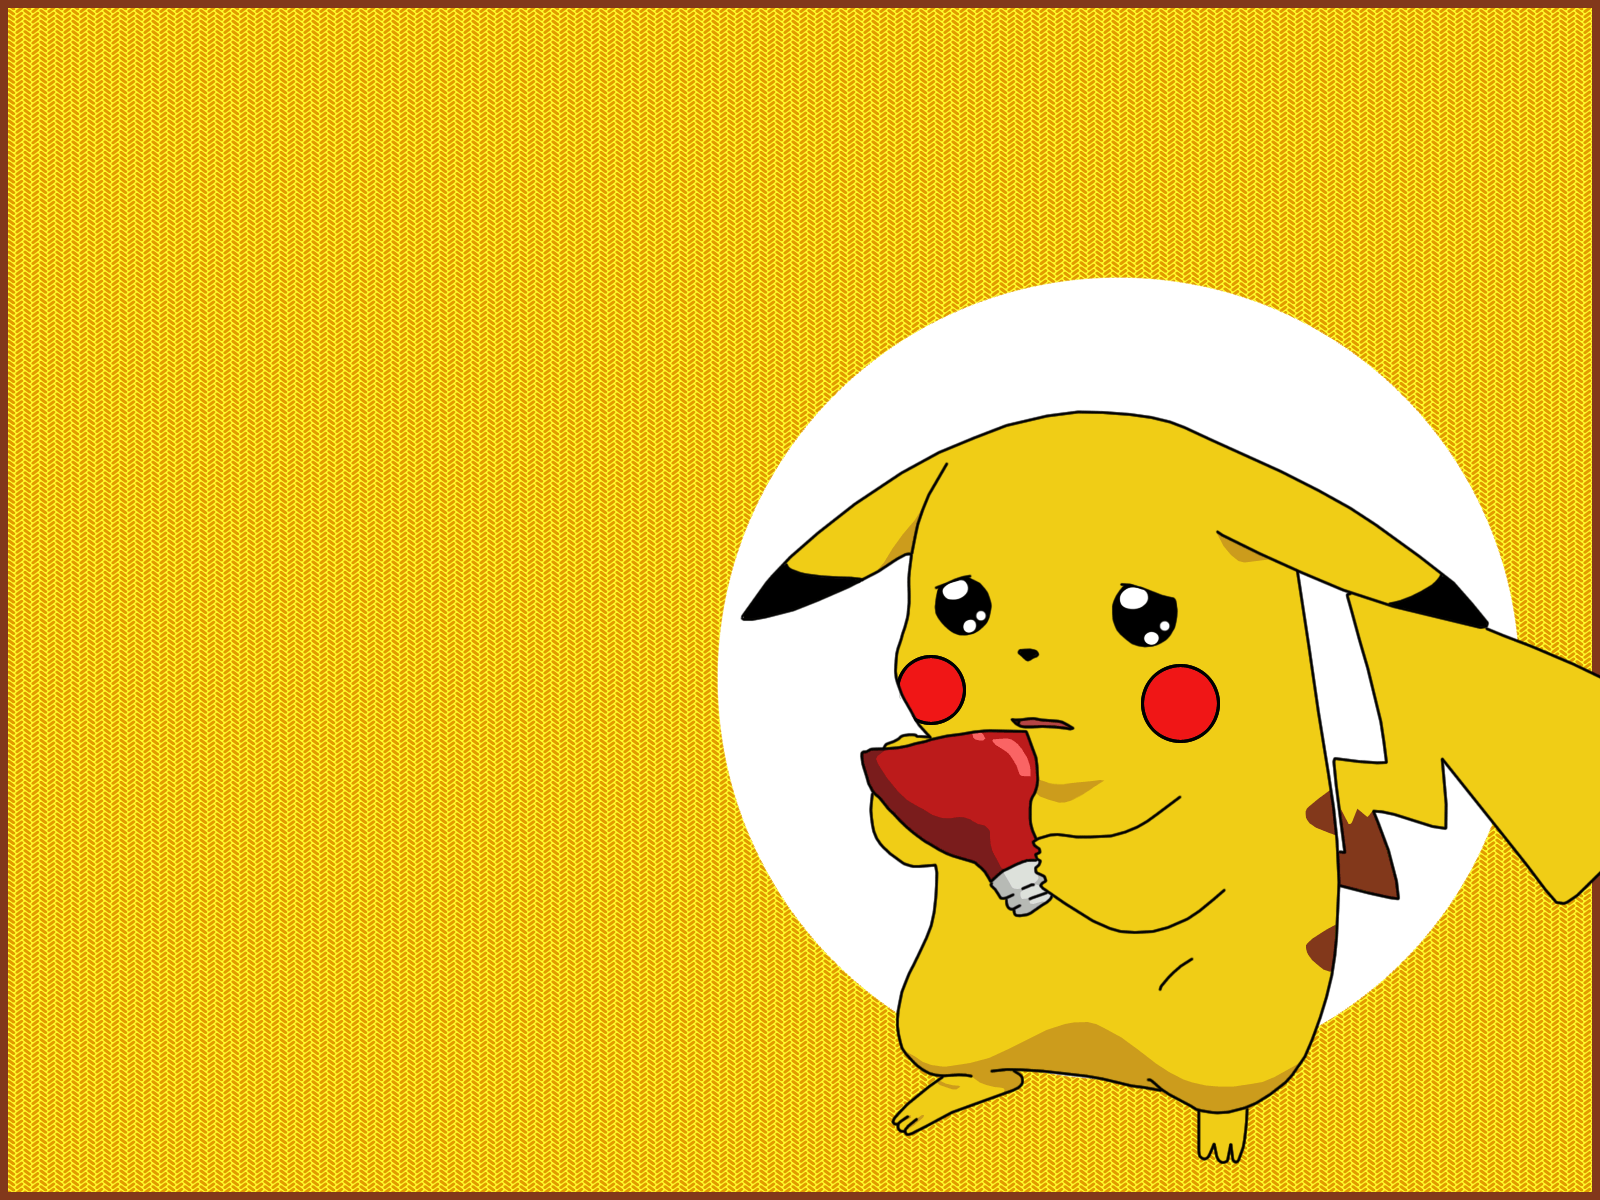 Wallpaper For > Pikachu Wallpaper For Computer